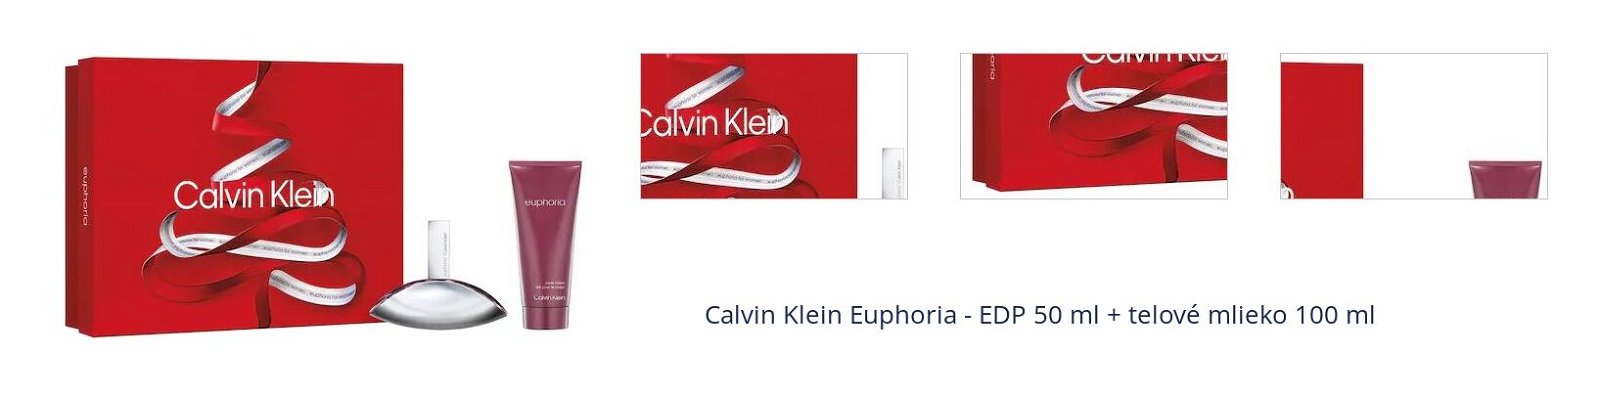 Calvin Klein Euphoria - EDP 50 ml + telové mlieko 100 ml 1